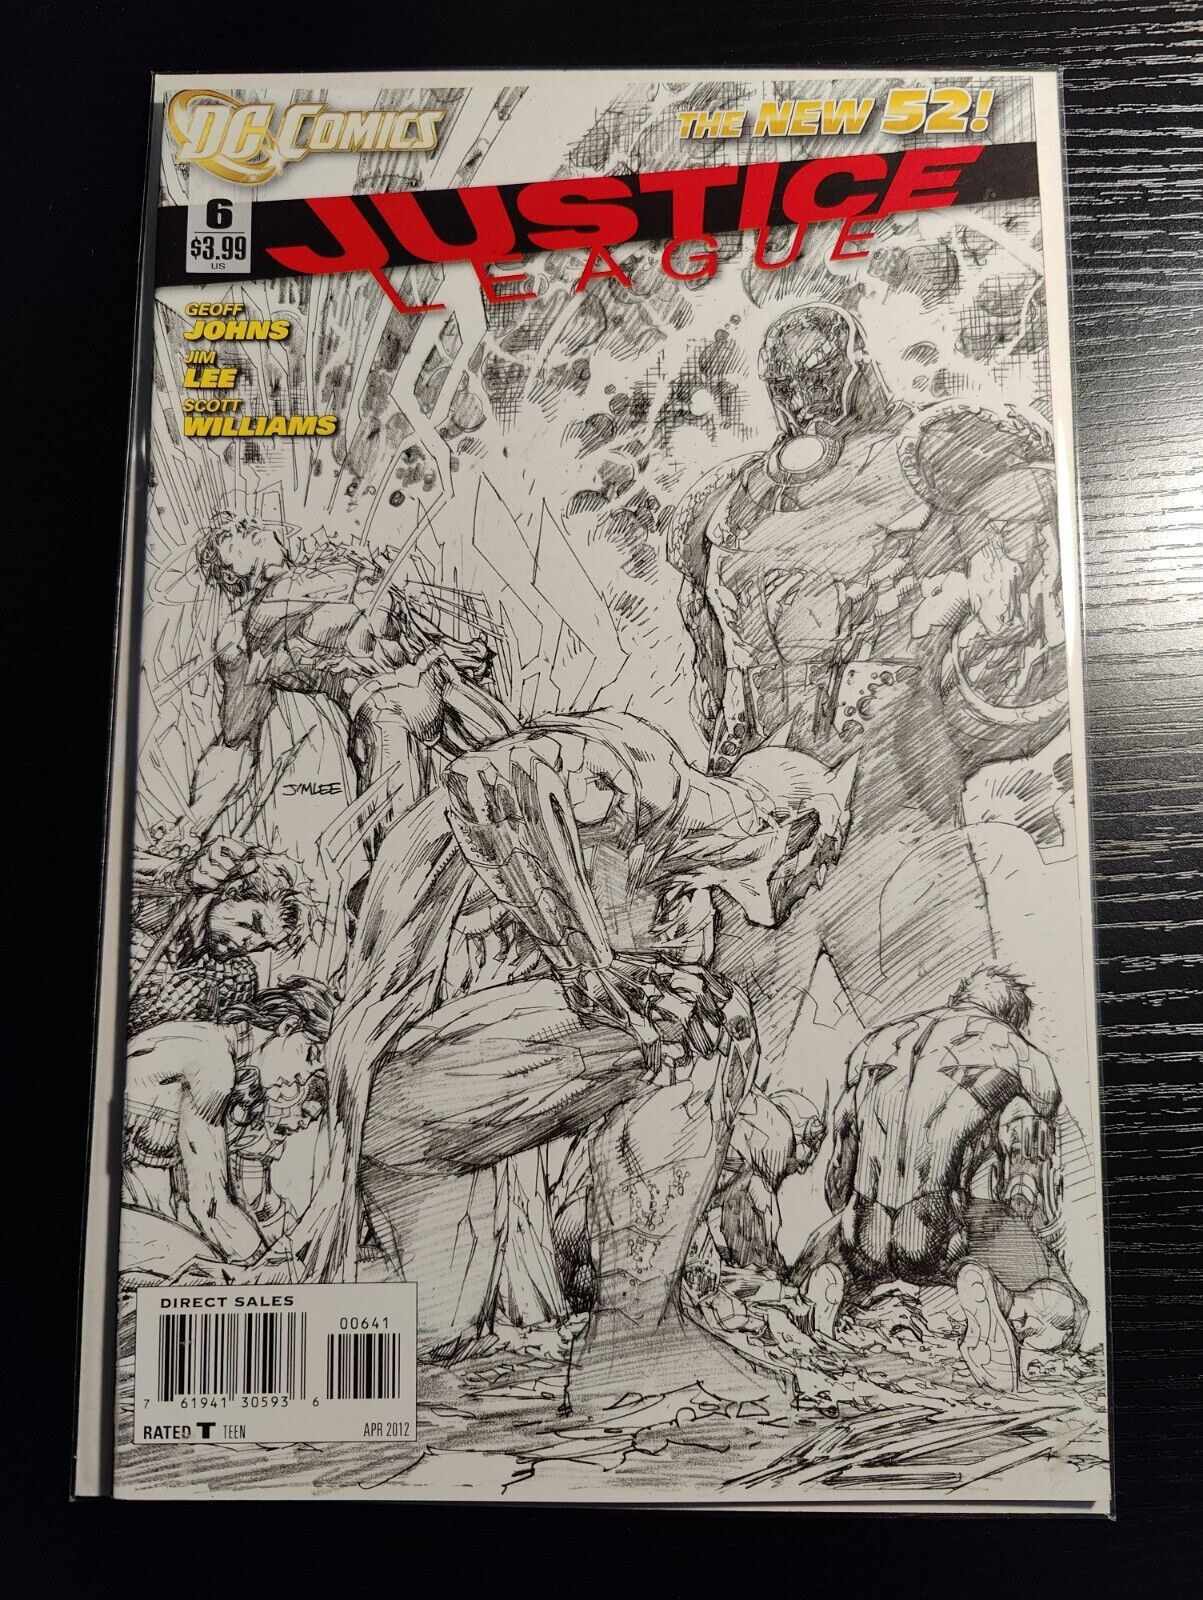 Justice League (DC New 52) #6 (2012) Jim Lee B&W Sketch 1:200 Variant